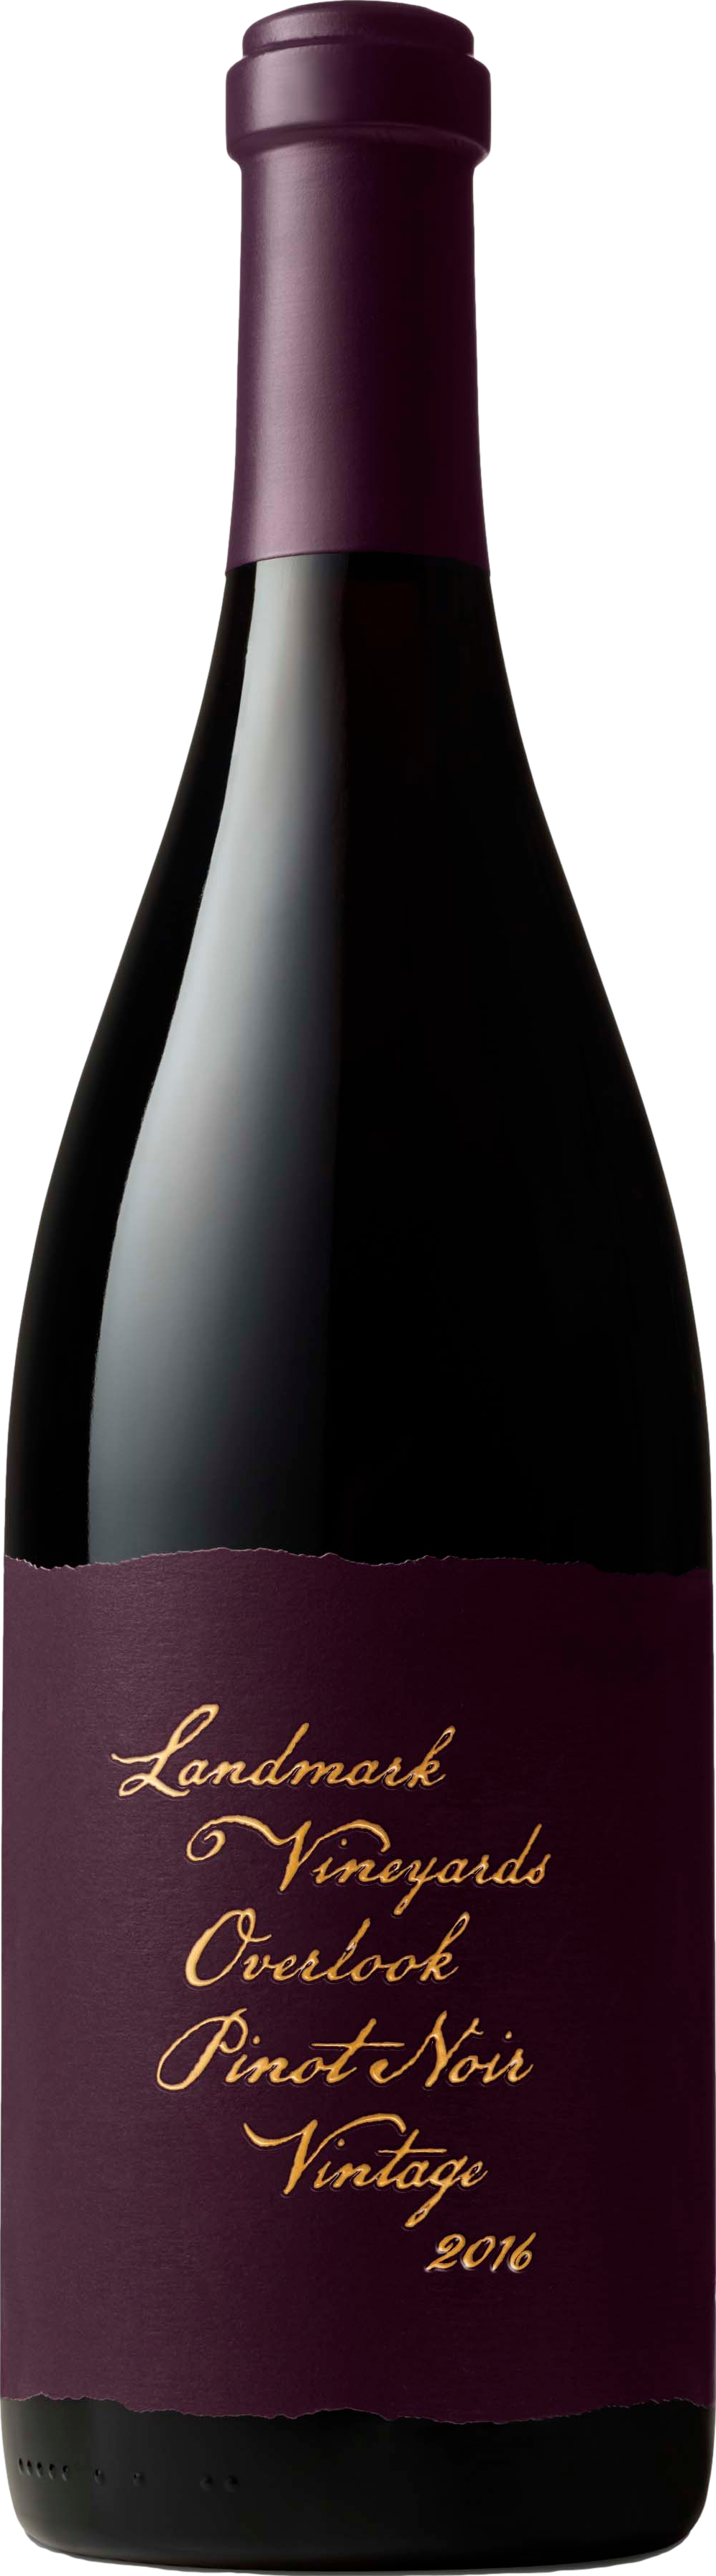 Landmark Vineyards Overlook Pinot Noir 2016